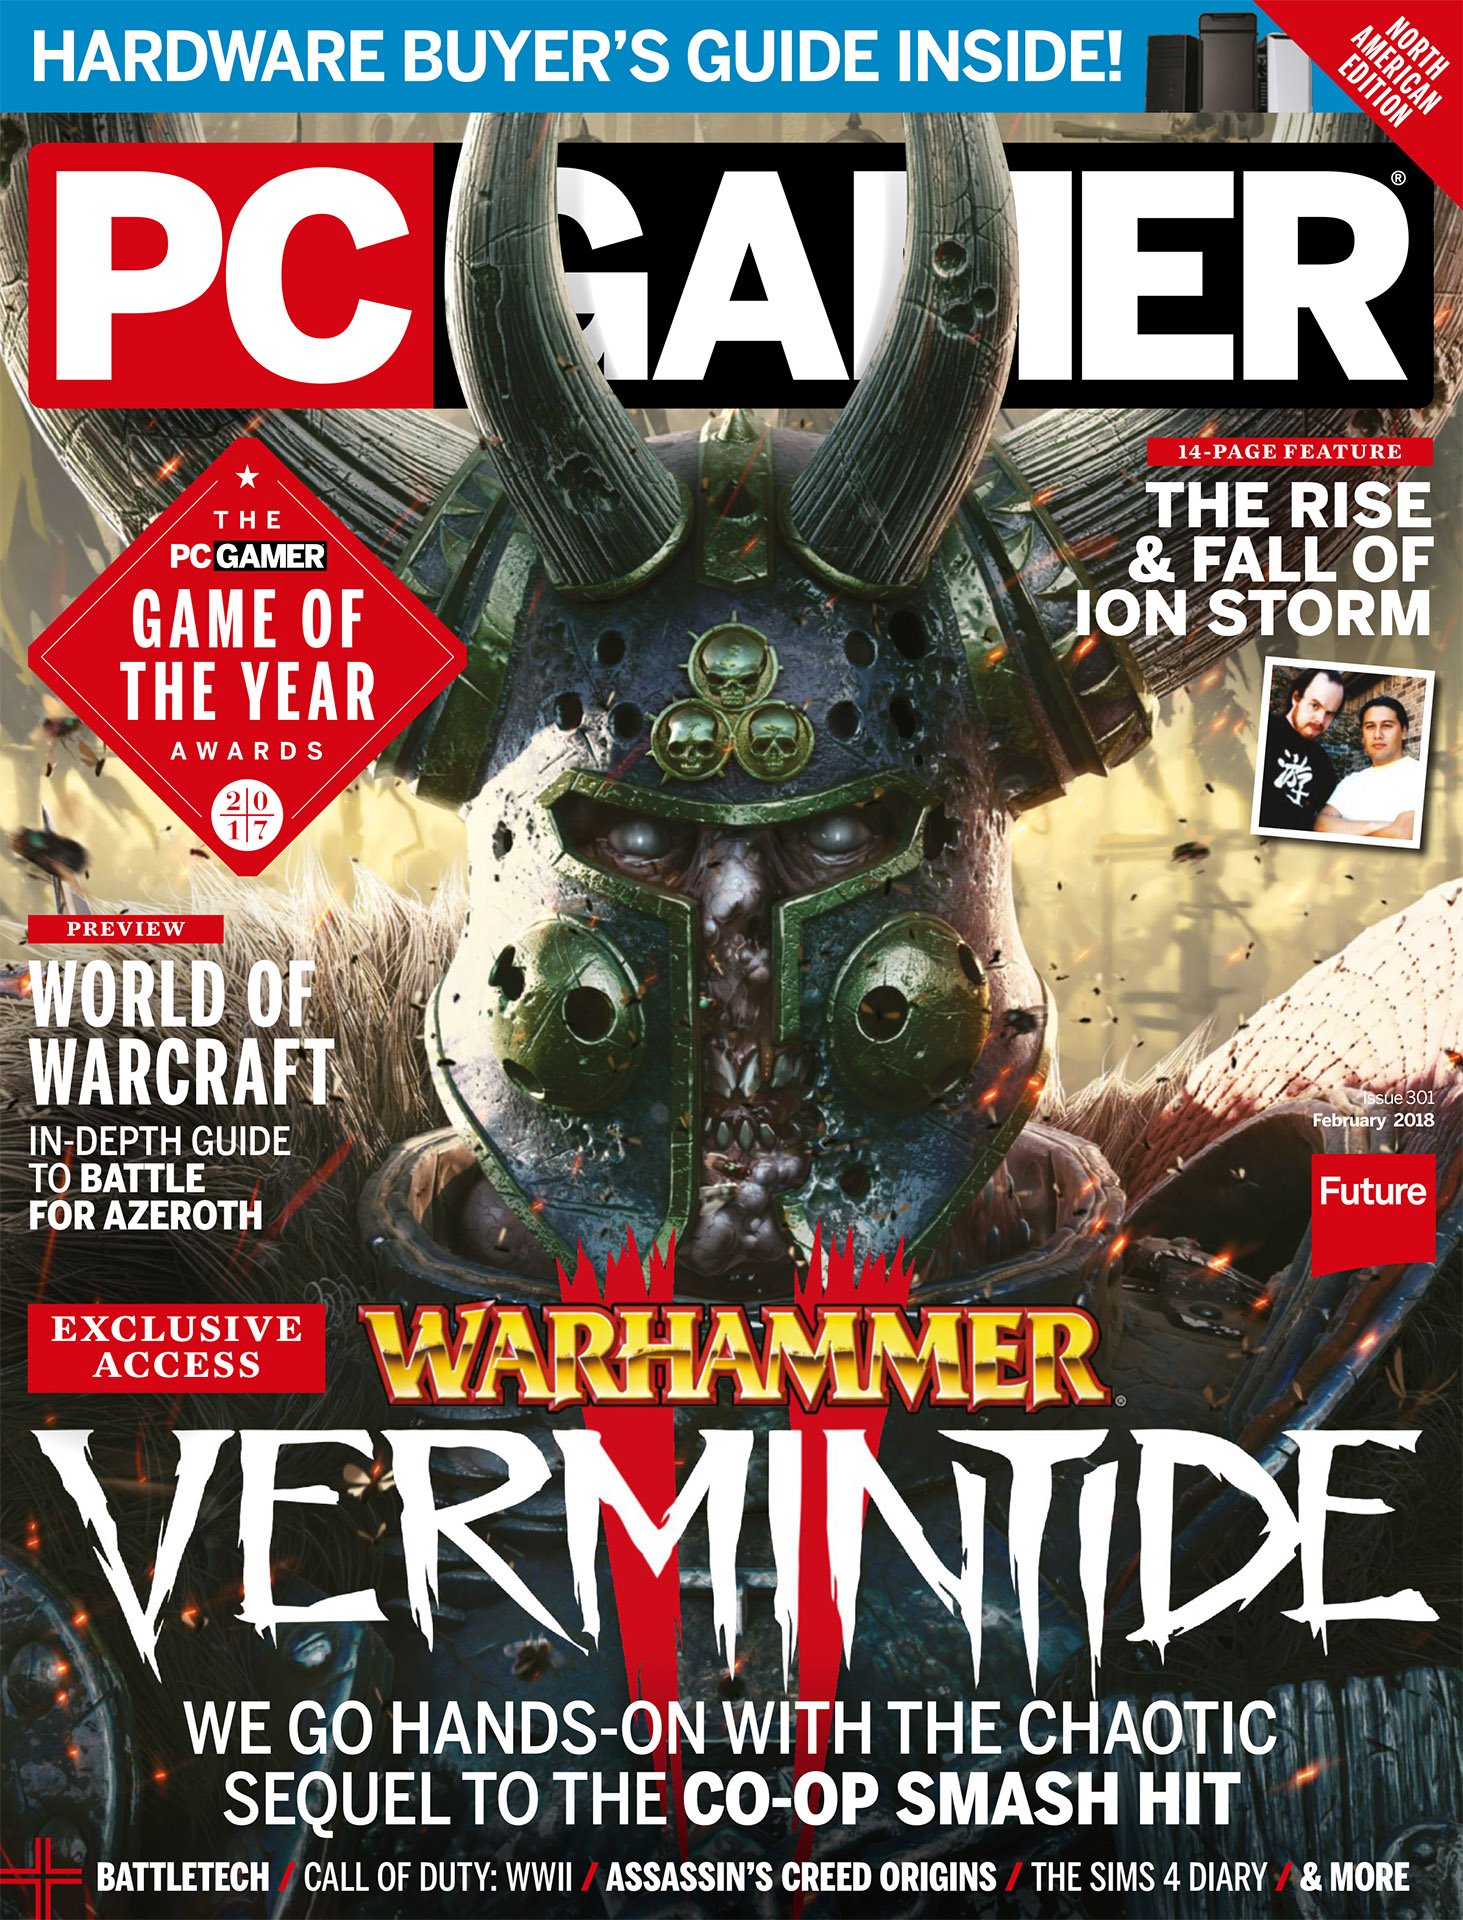 PC Gamer Issue 301 (February 2018)